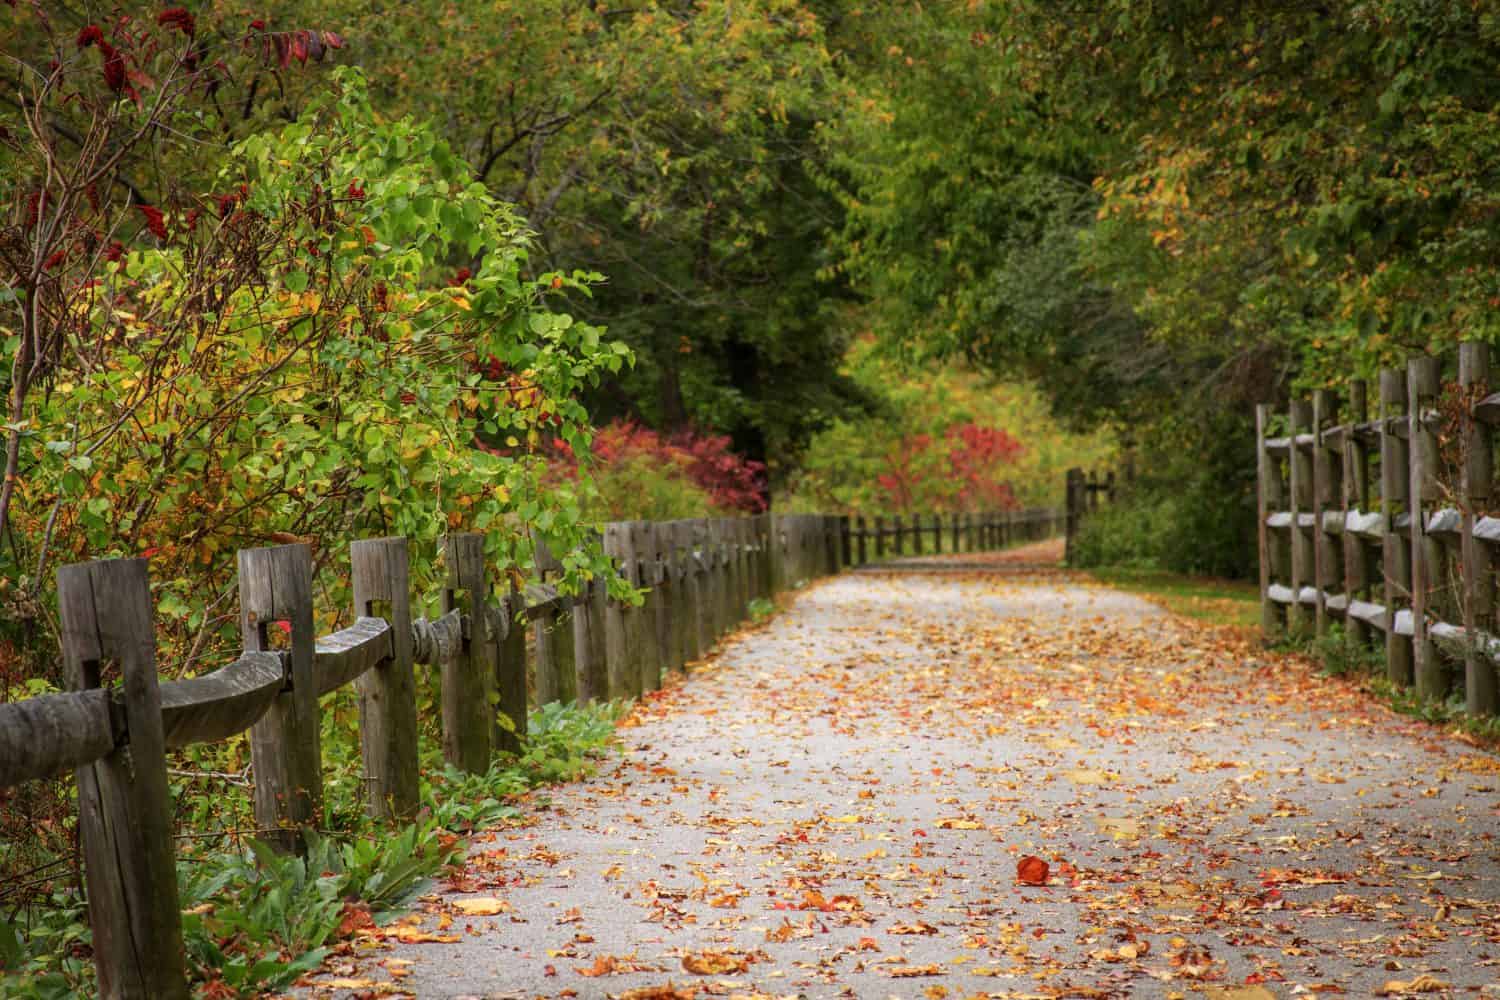 Autumn leaves on Blackstone River Bikeway in Cumberland, Rhode Island